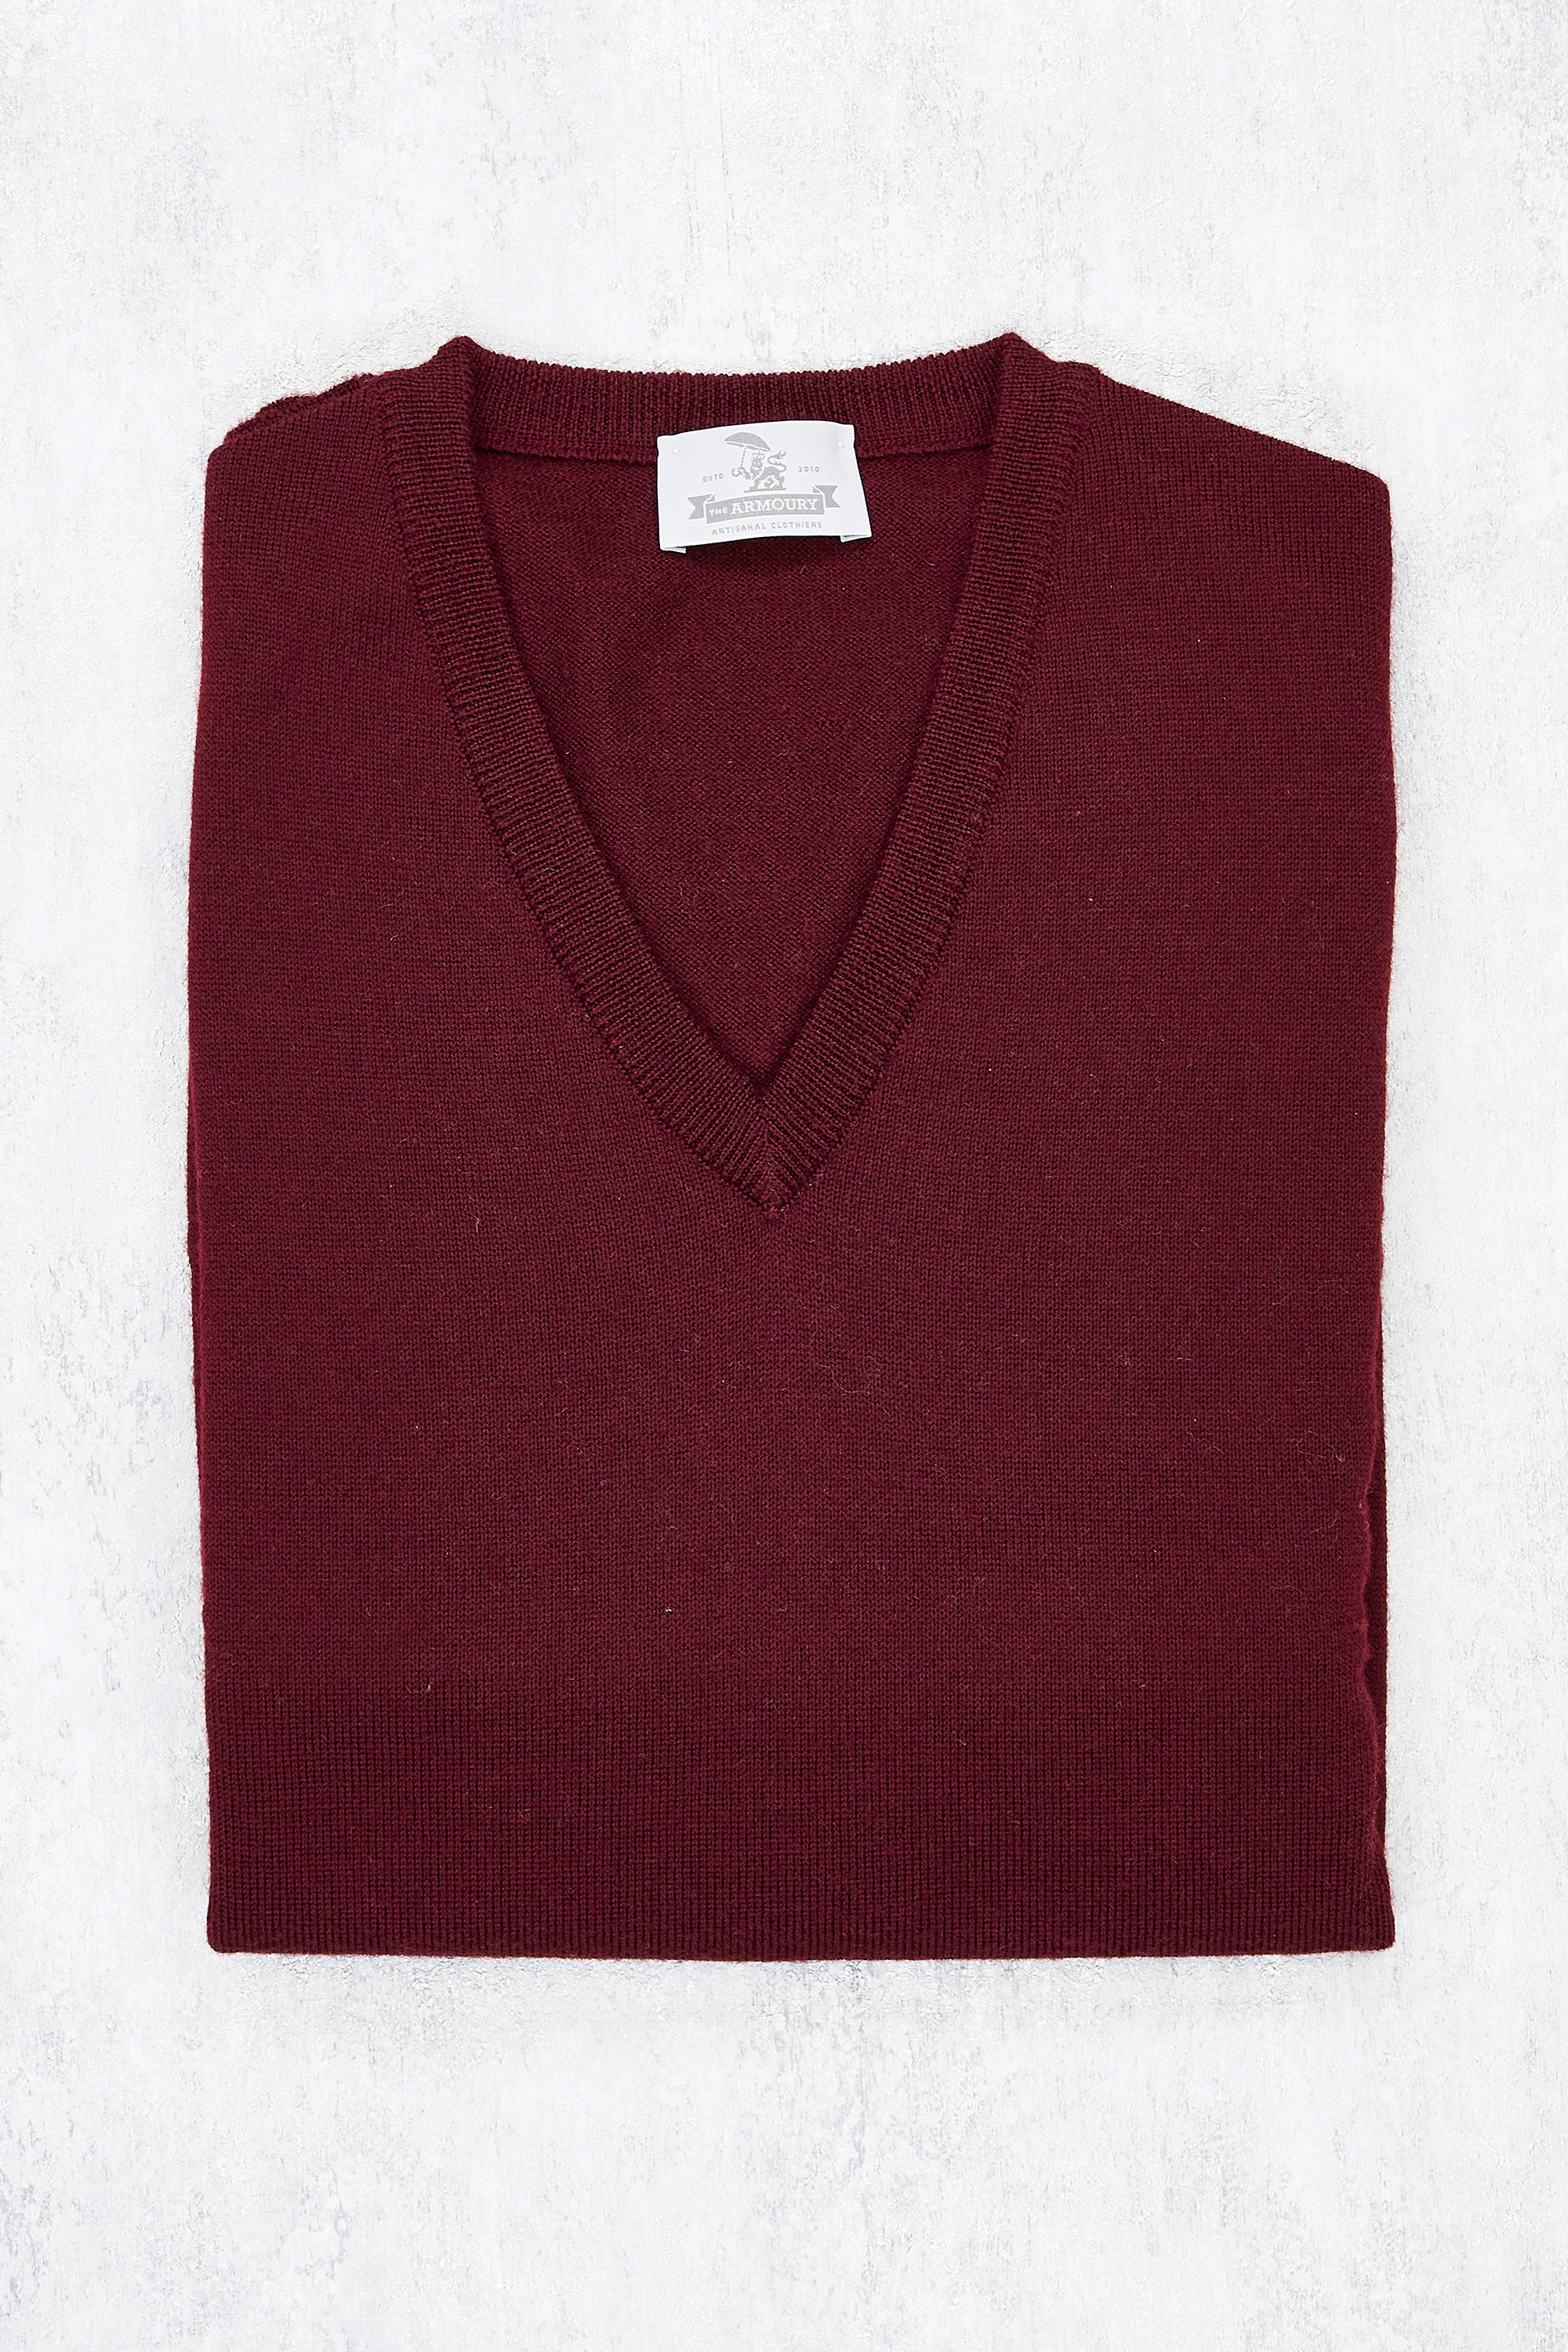 The Armoury Burgundy Merino V Neck Sweater